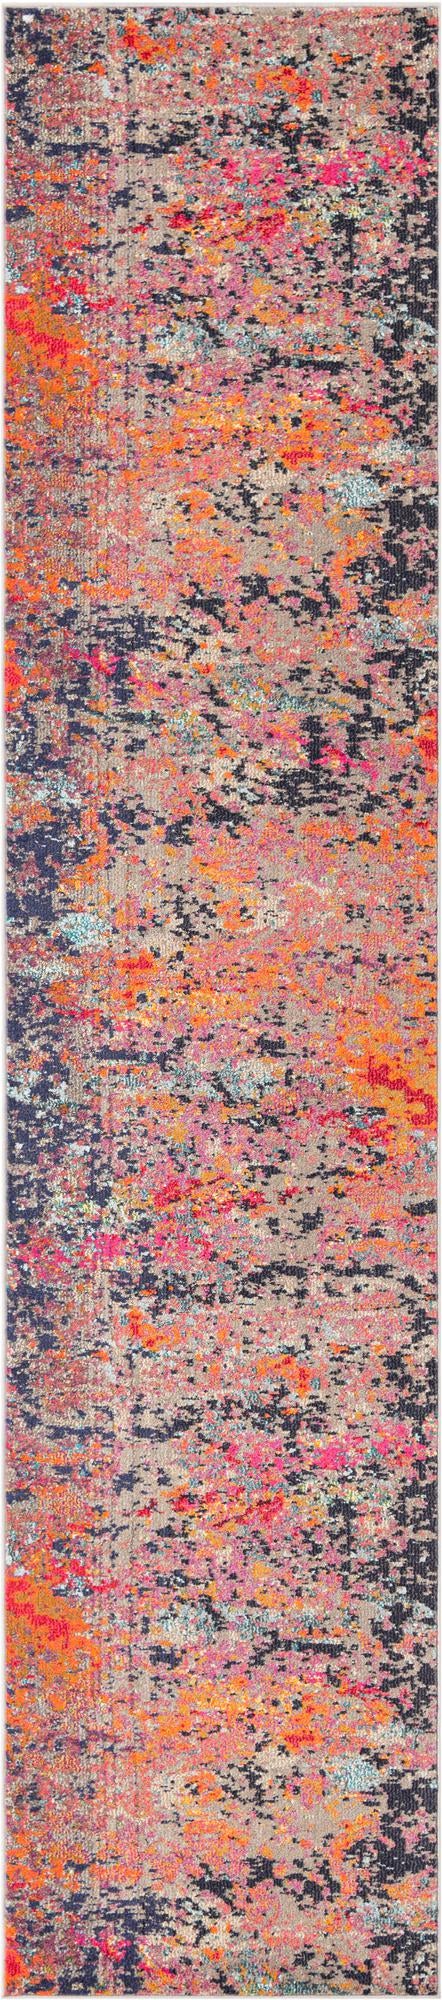 strouver contemporary area rug collection